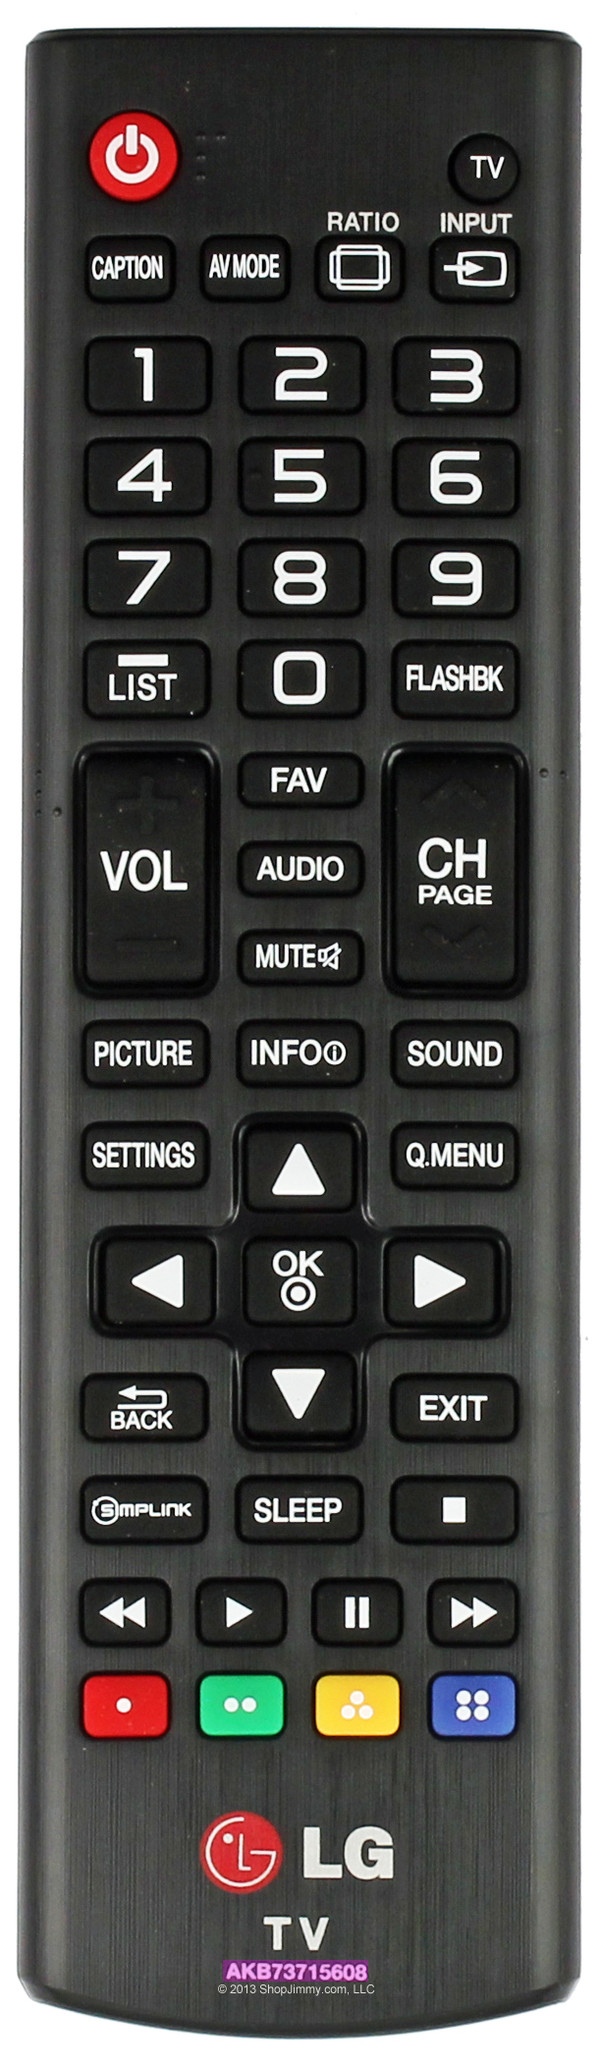 LG AKB73715608 LED TV Remote Control--NEW